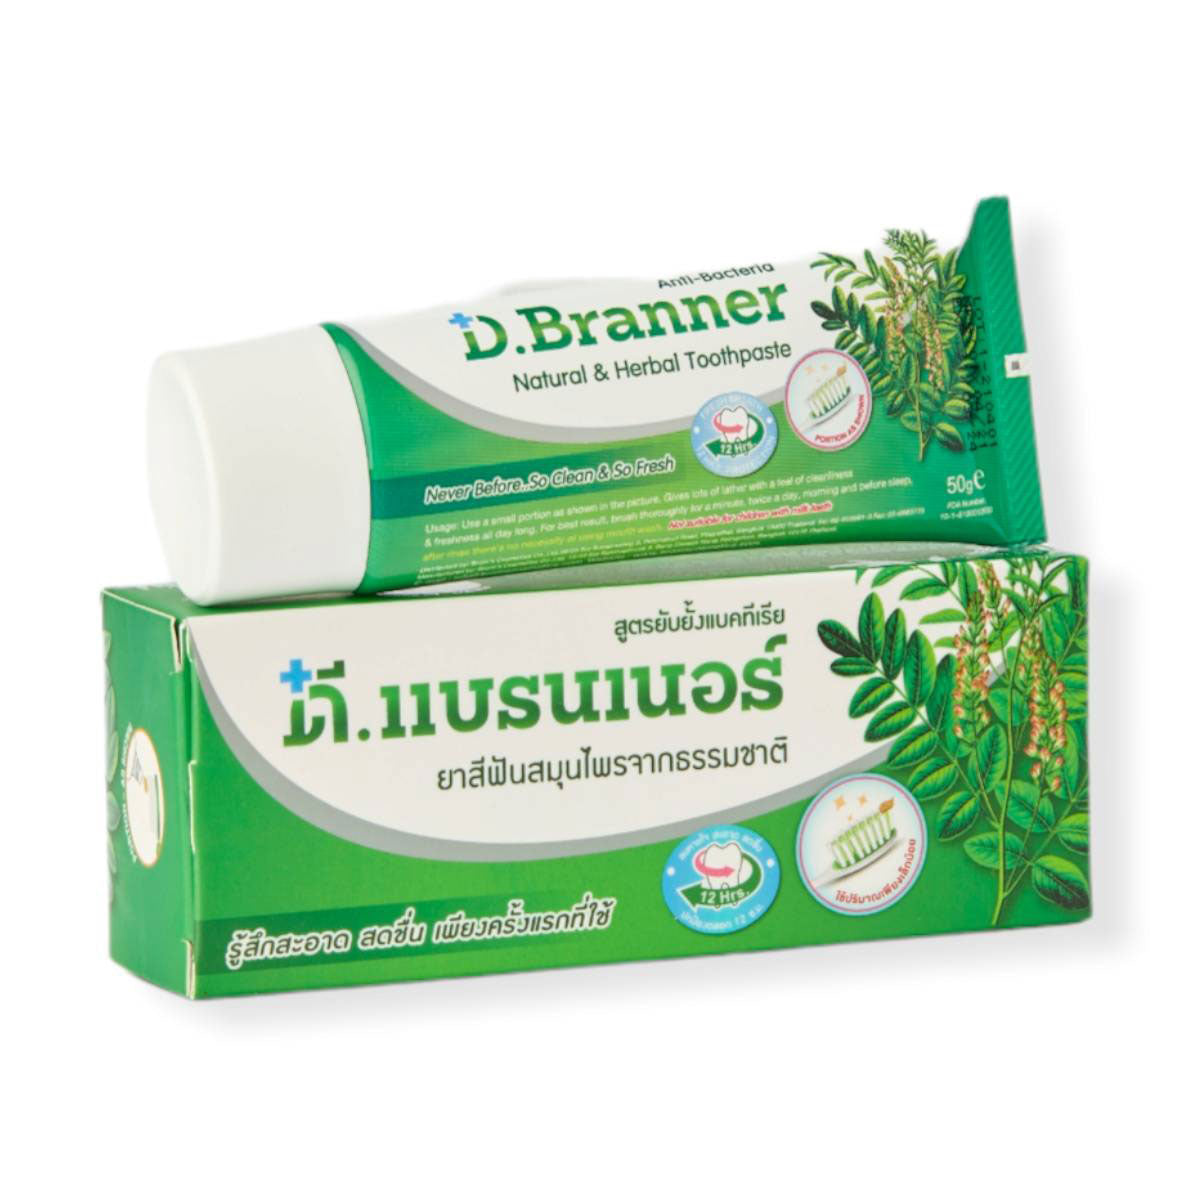 D.Branner Herbal Toothpaste, 50g